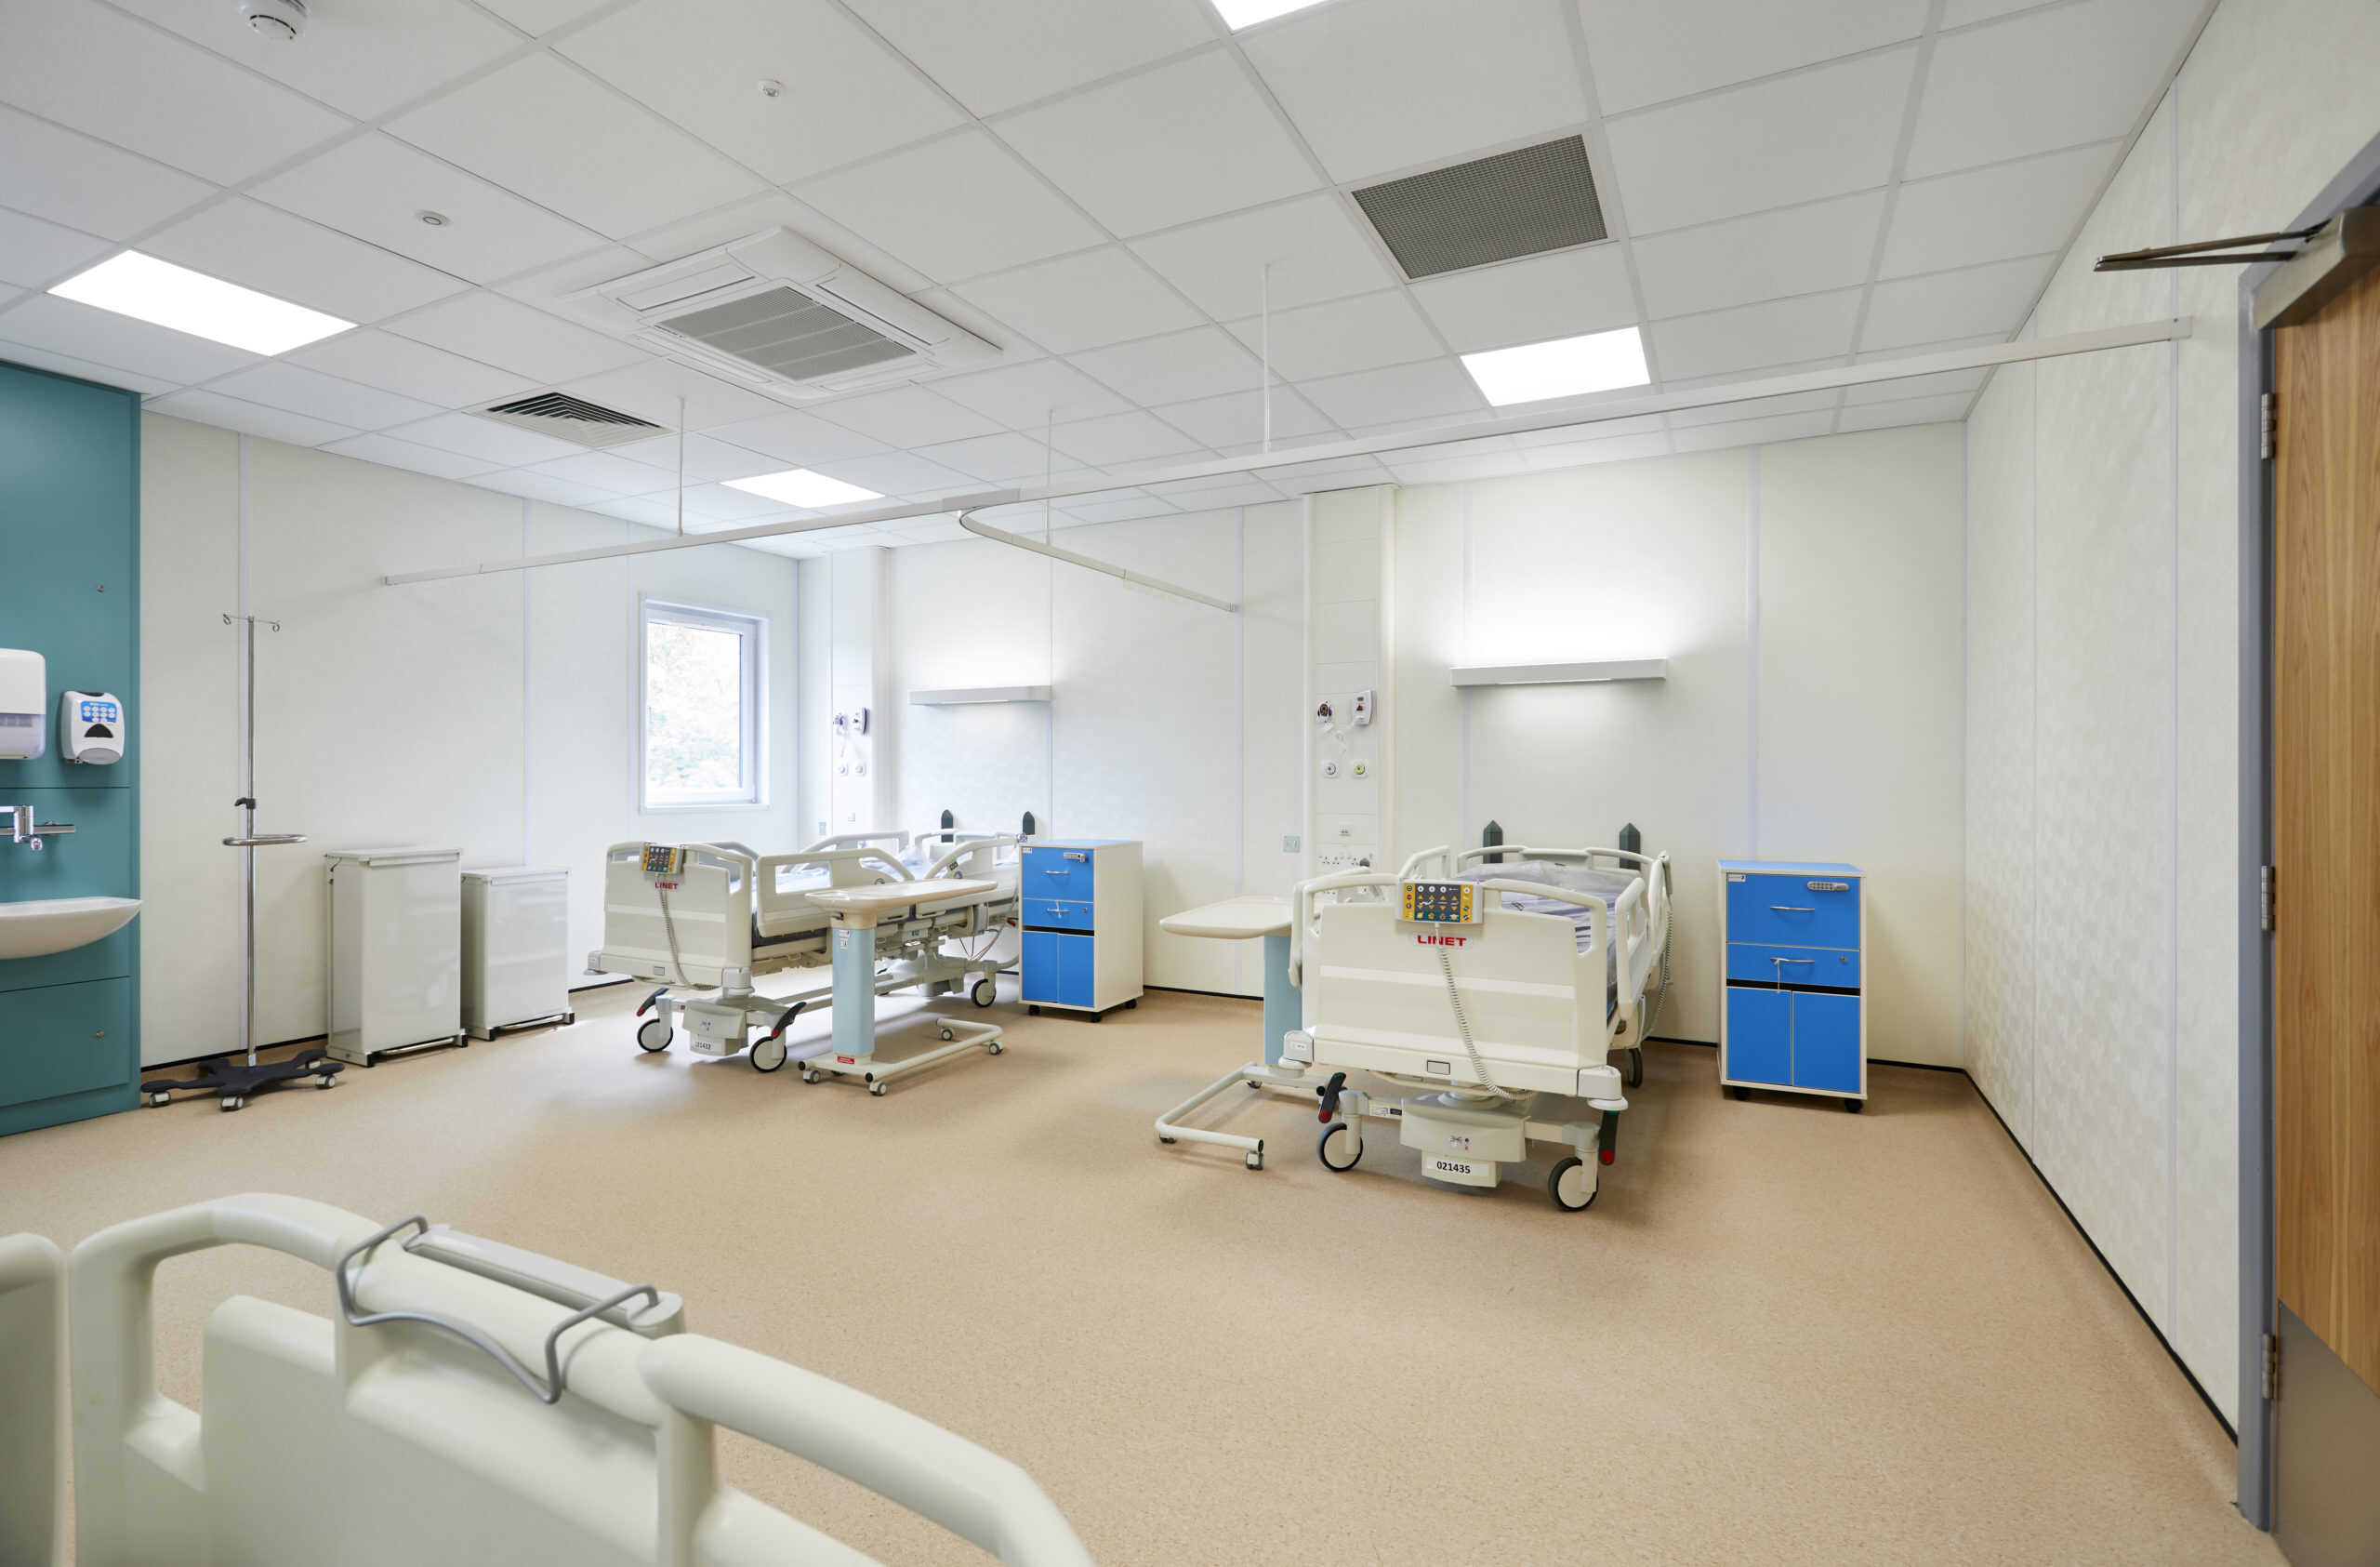 Modular hospital room completed for Dorset County Hospital. 2 Hospital beds alongside cabinets and hosital equipment. 